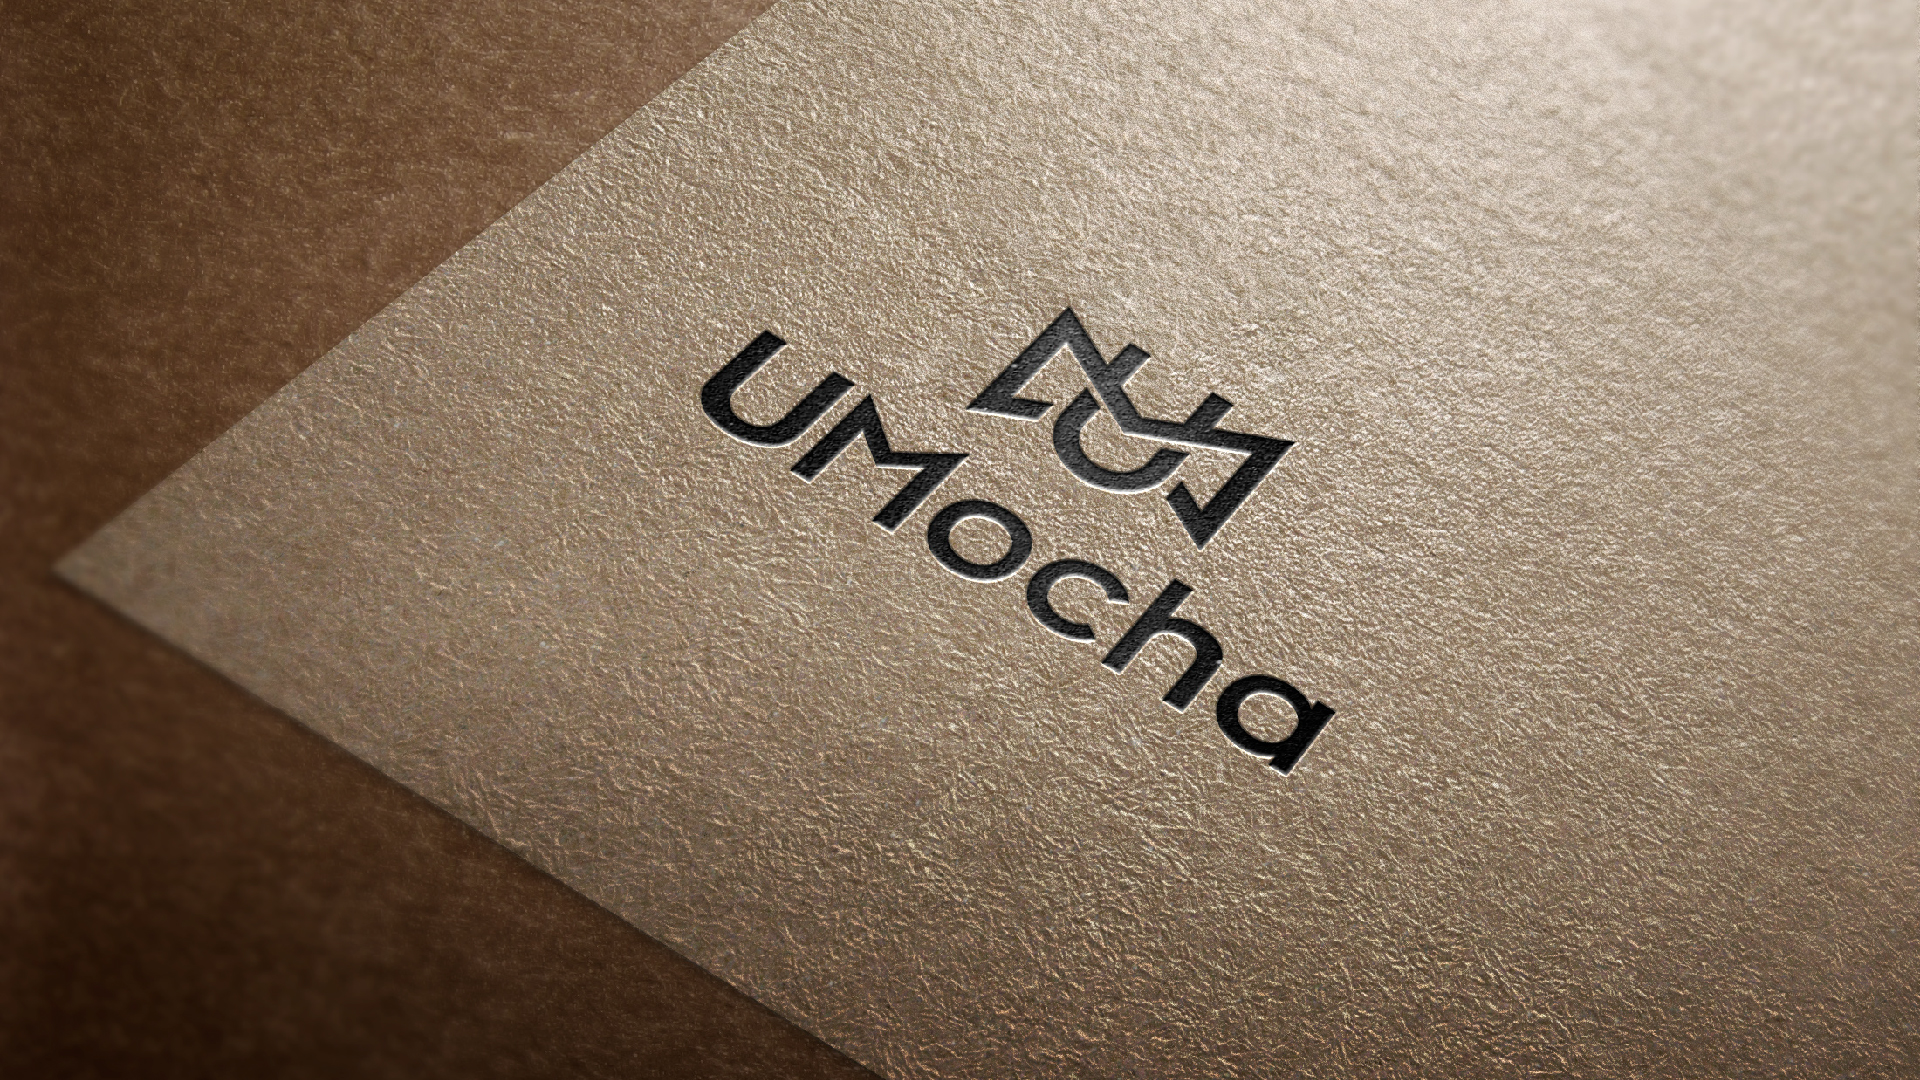 UMocha咖啡logo设计